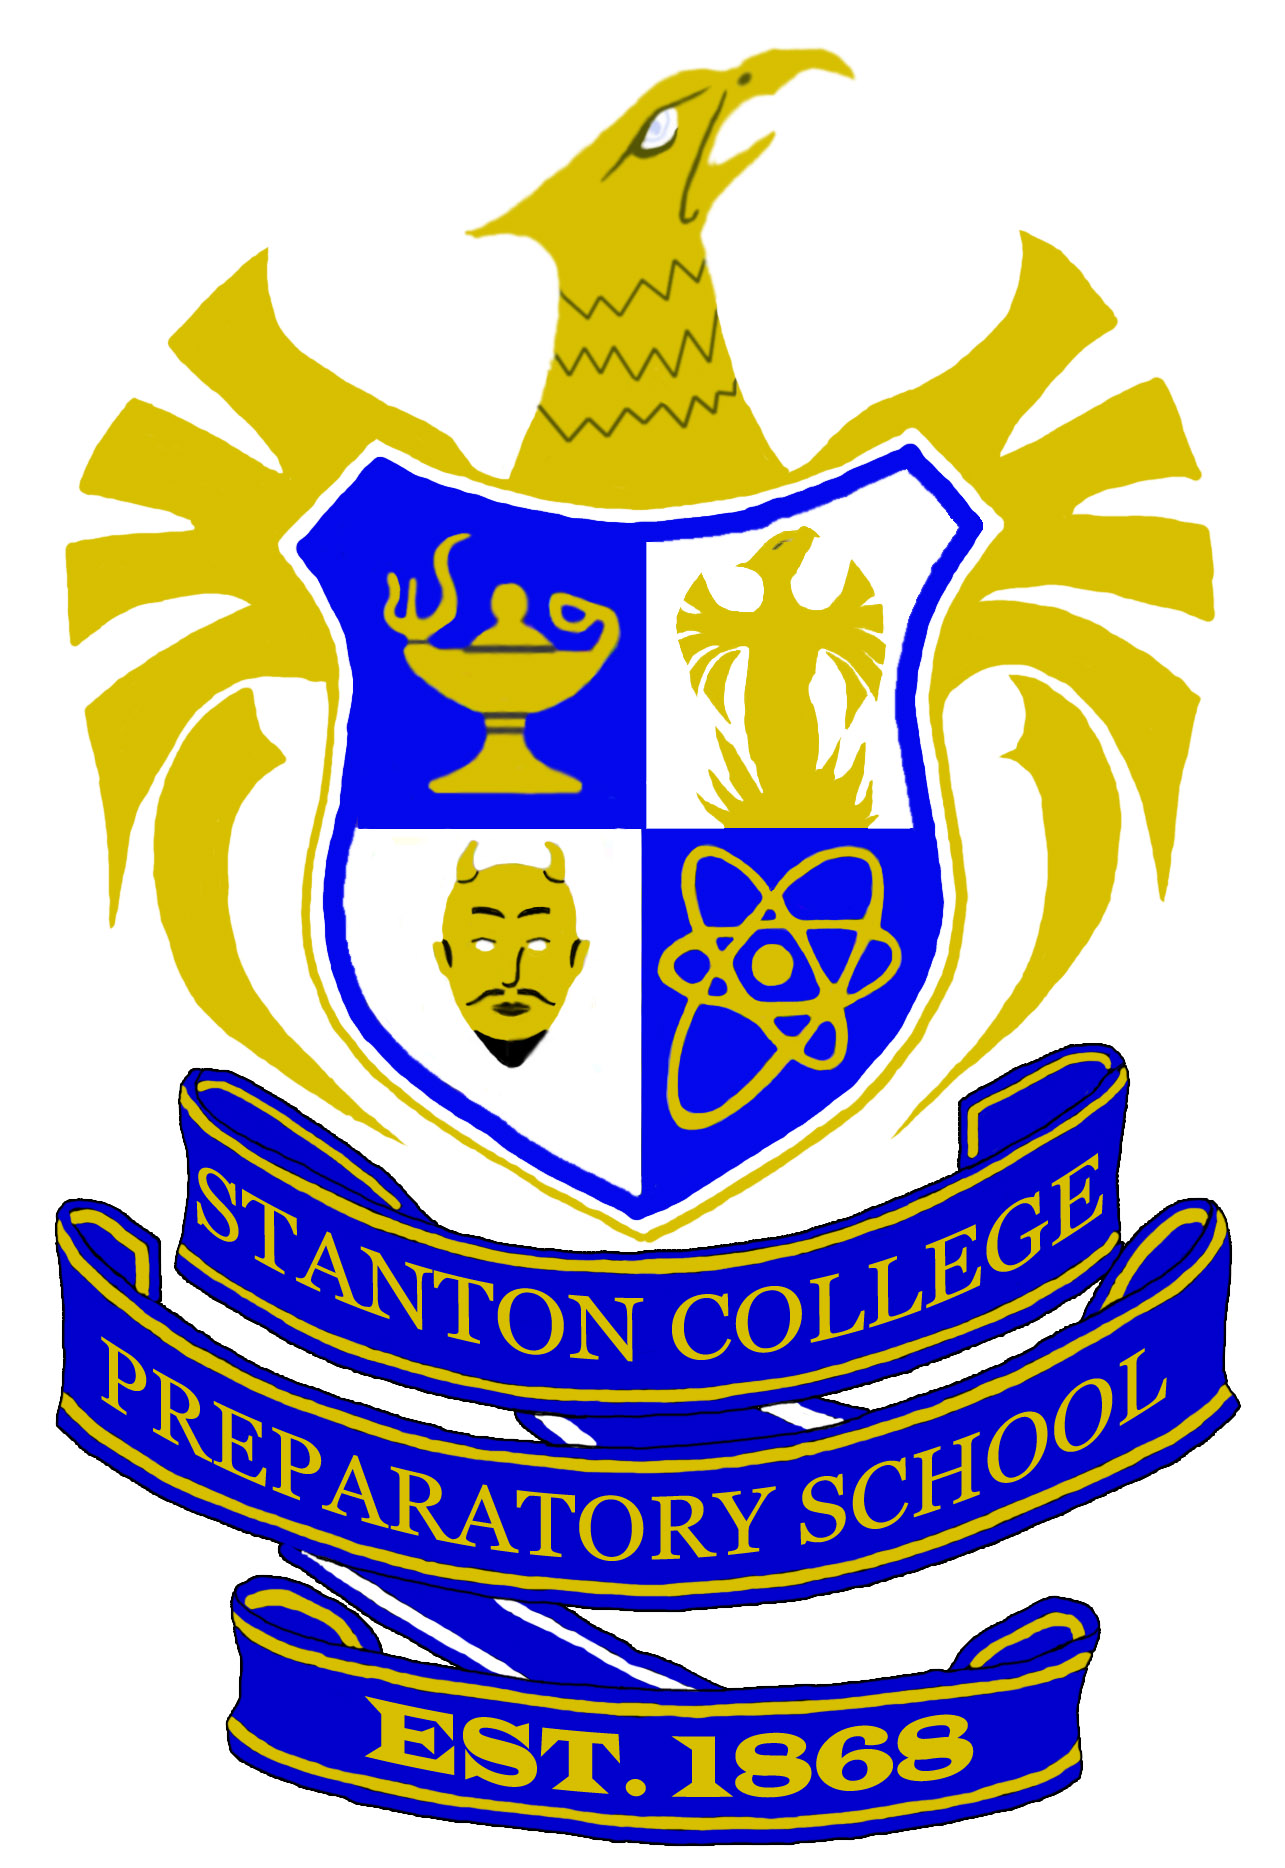 stanton college prep logo - Clip Art Library